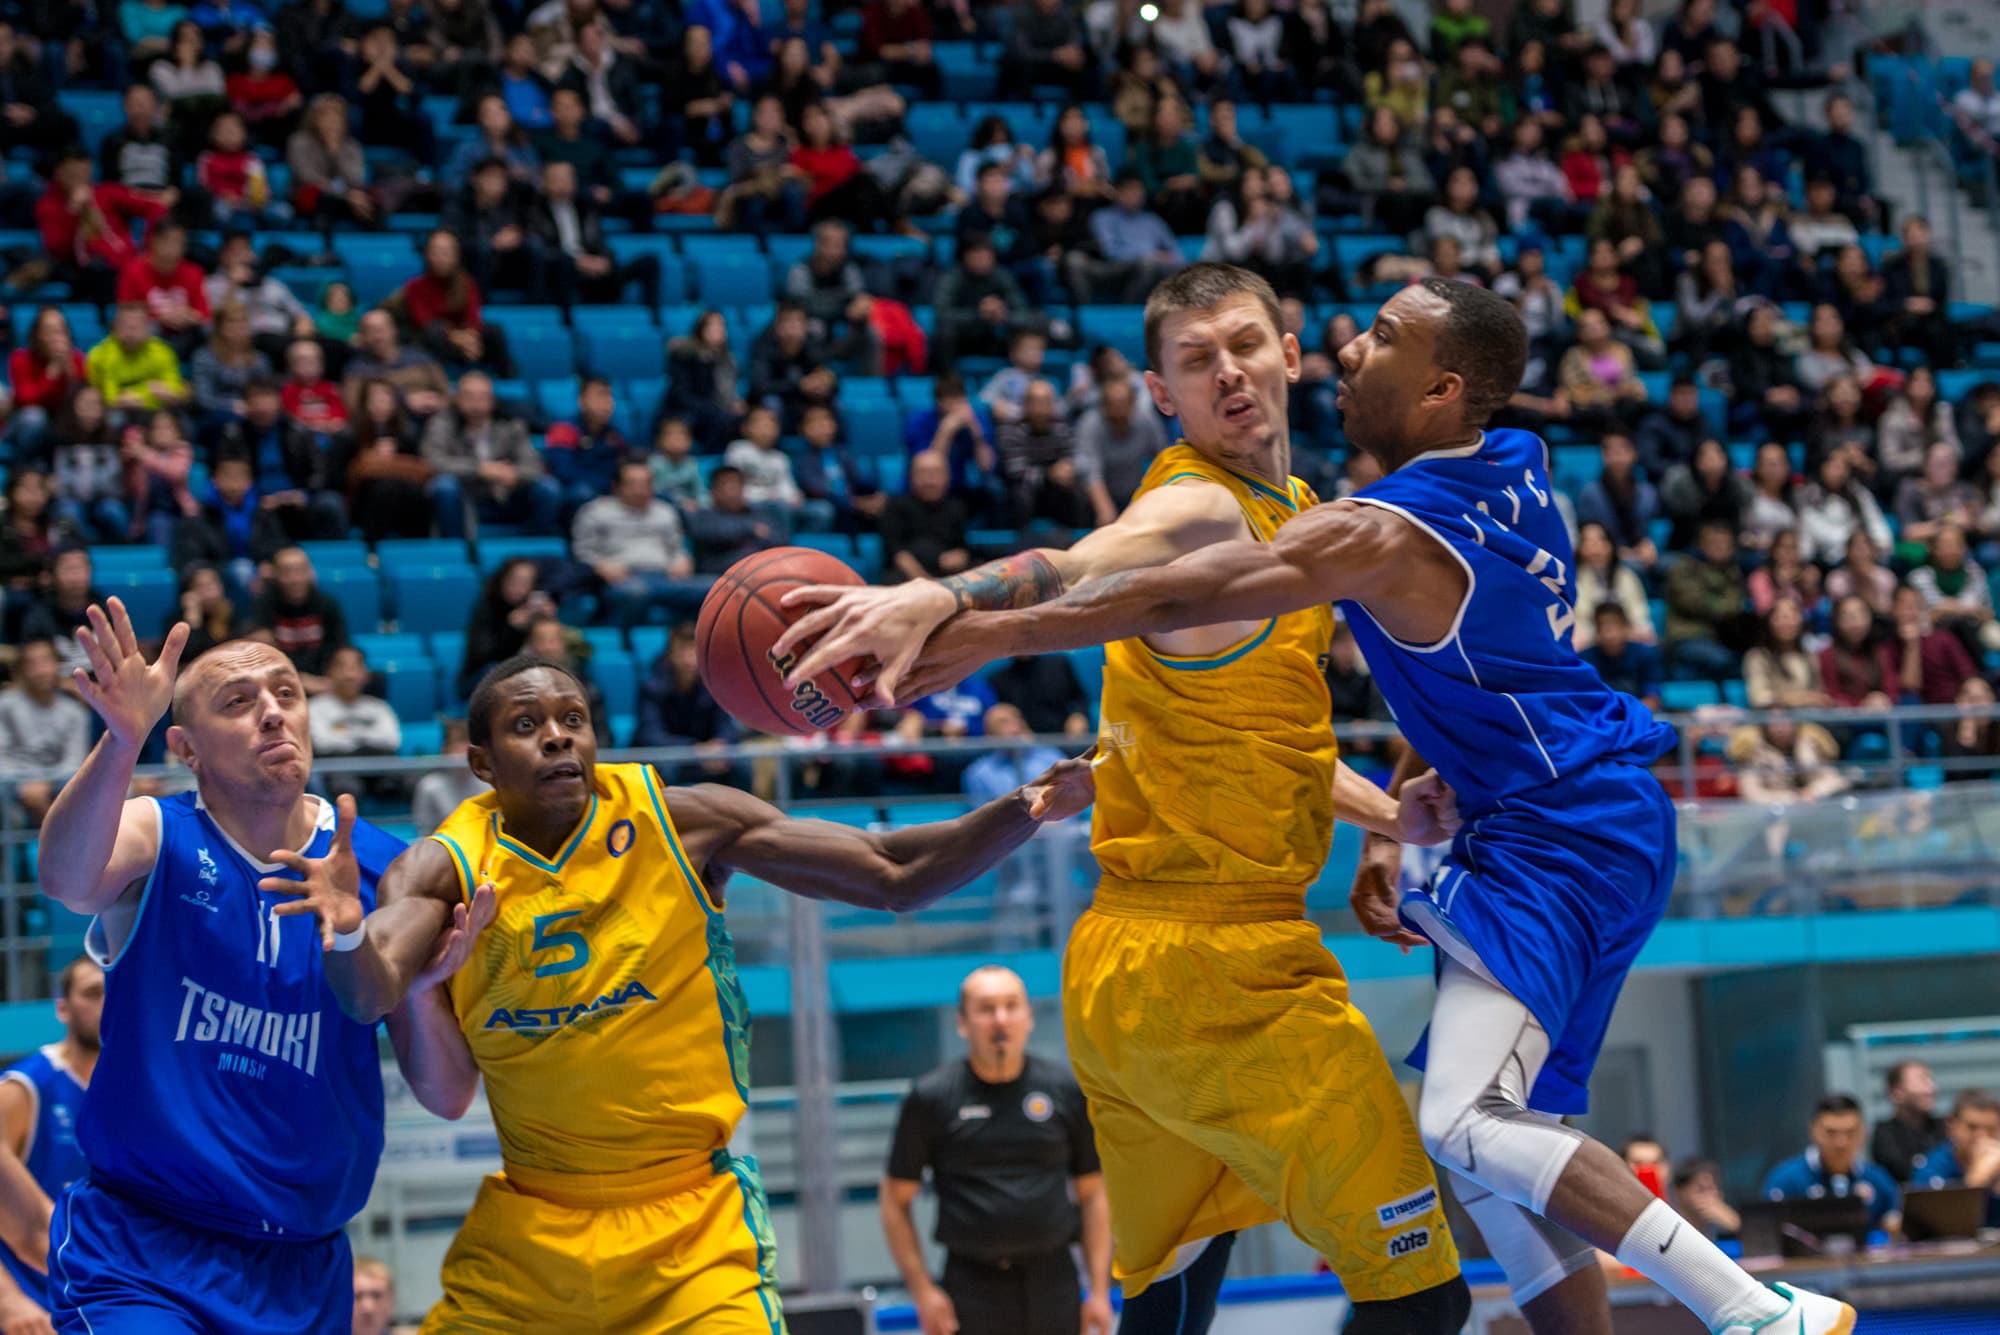 Watch: Astana vs. Tsmoki-Minsk Highlights